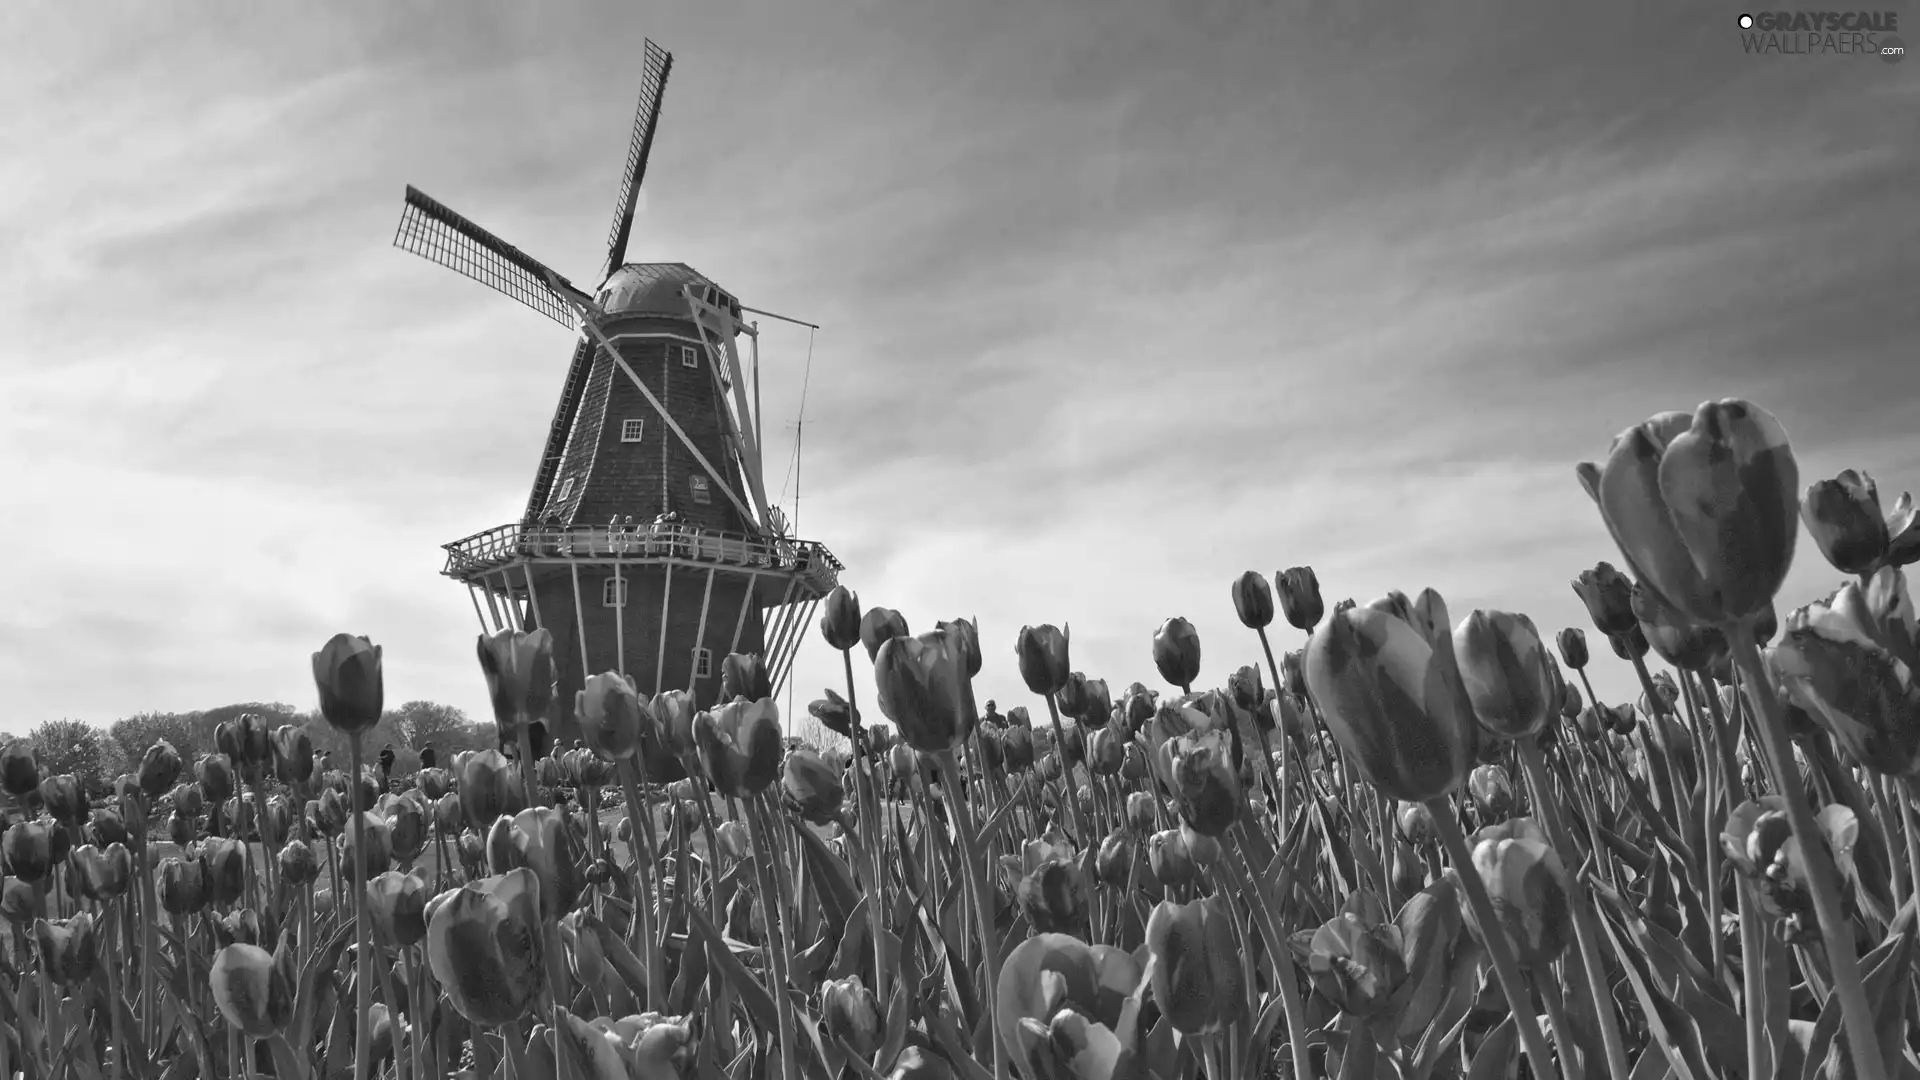 Tulips, Windmill